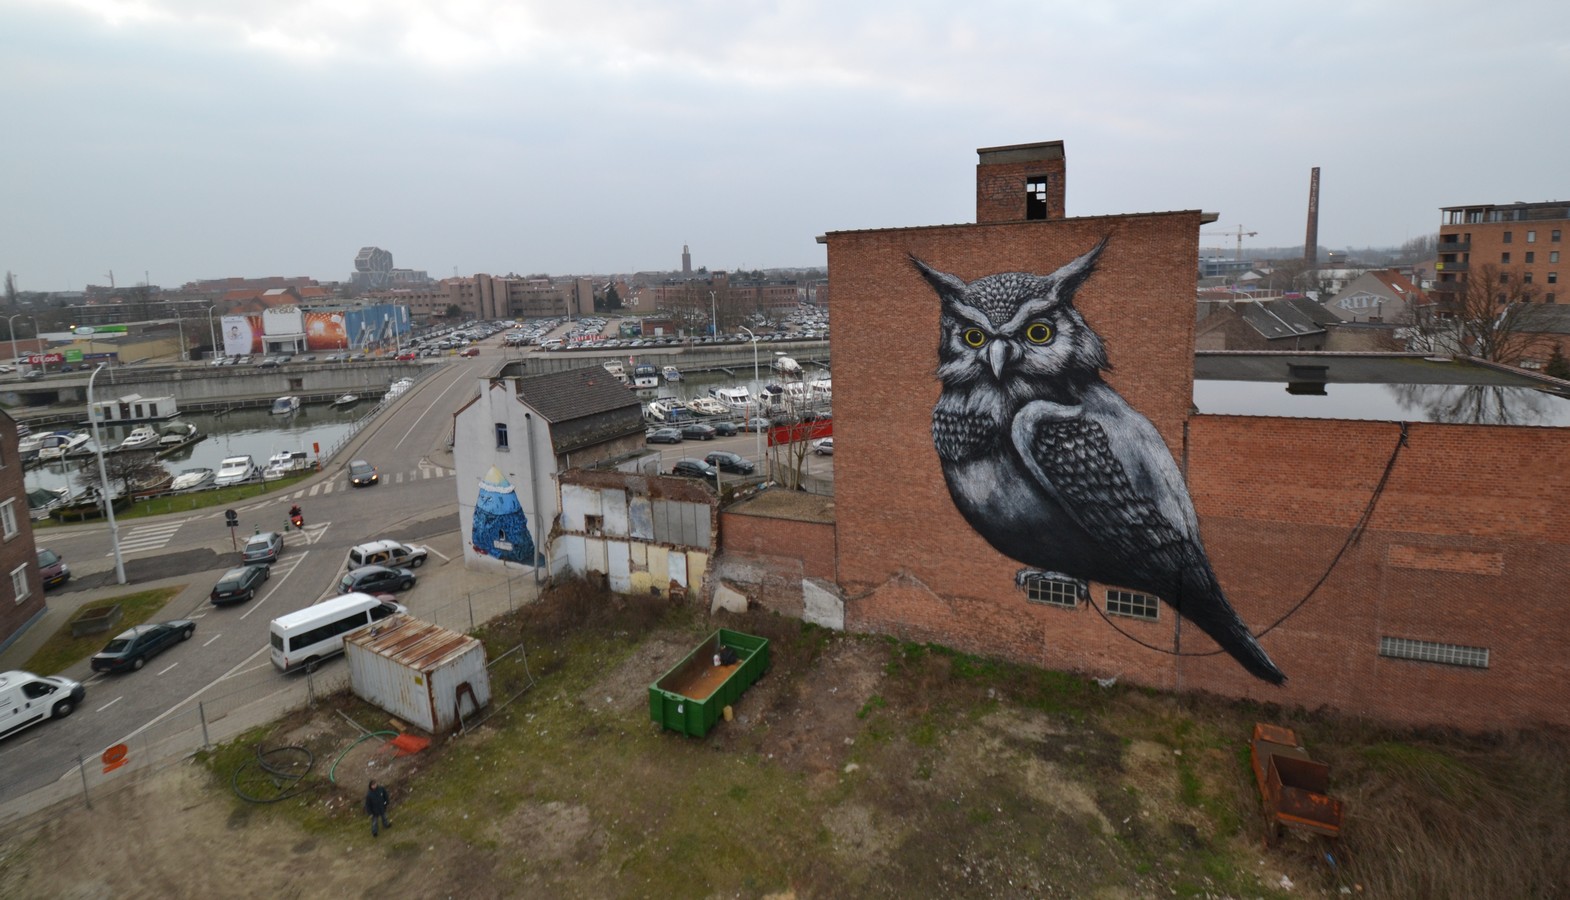  roa resto owl hasselt belgium